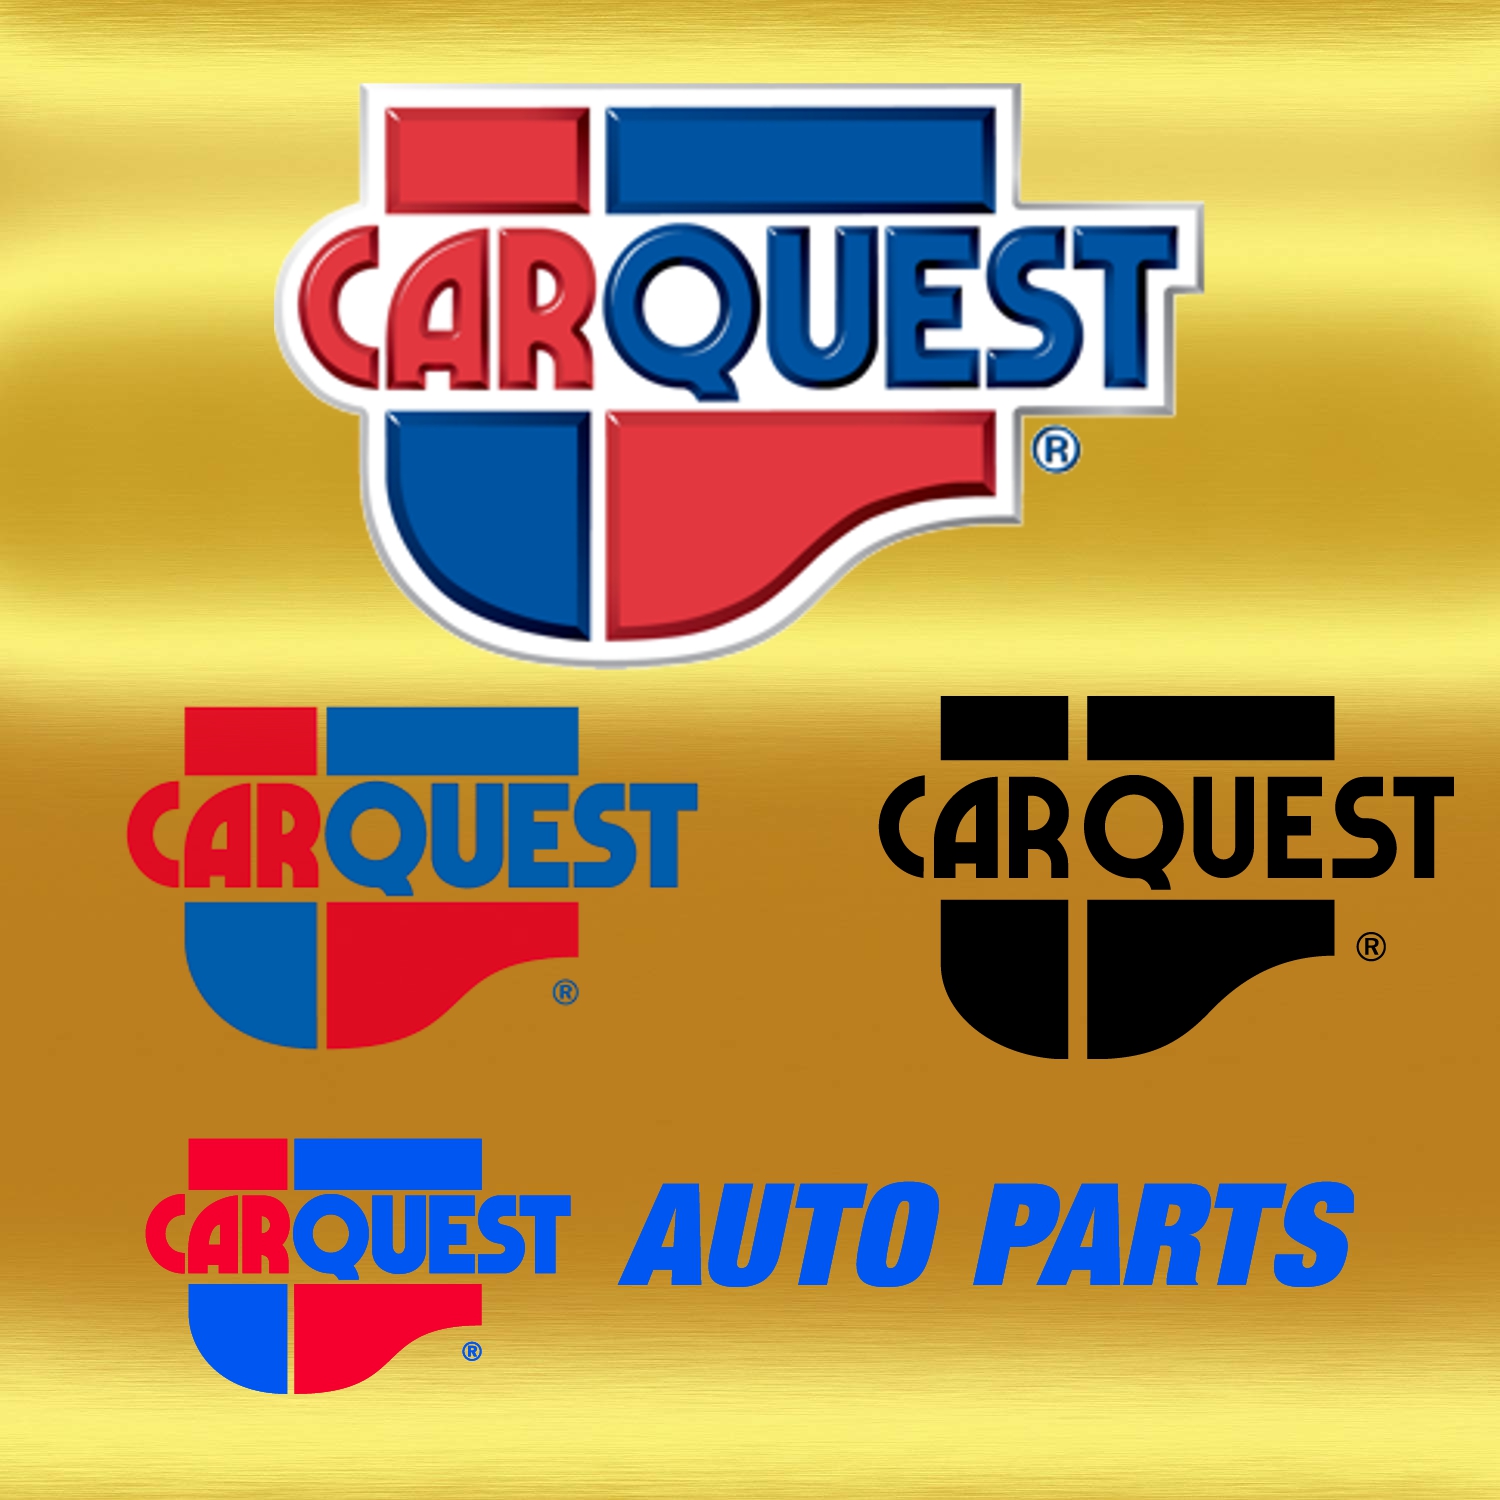 Car quest logos.jpg